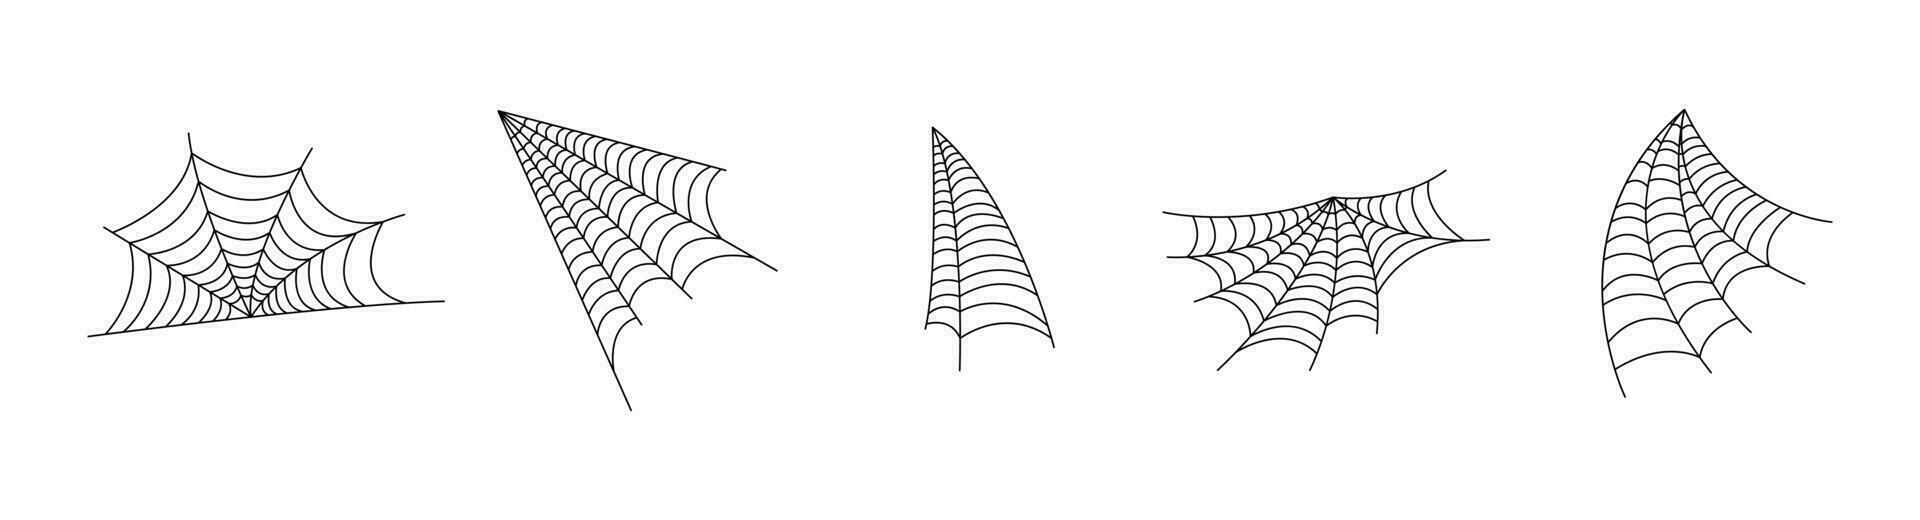 Hand drawn spider web icon set isolated on white. Black halloween cobweb vector illustration